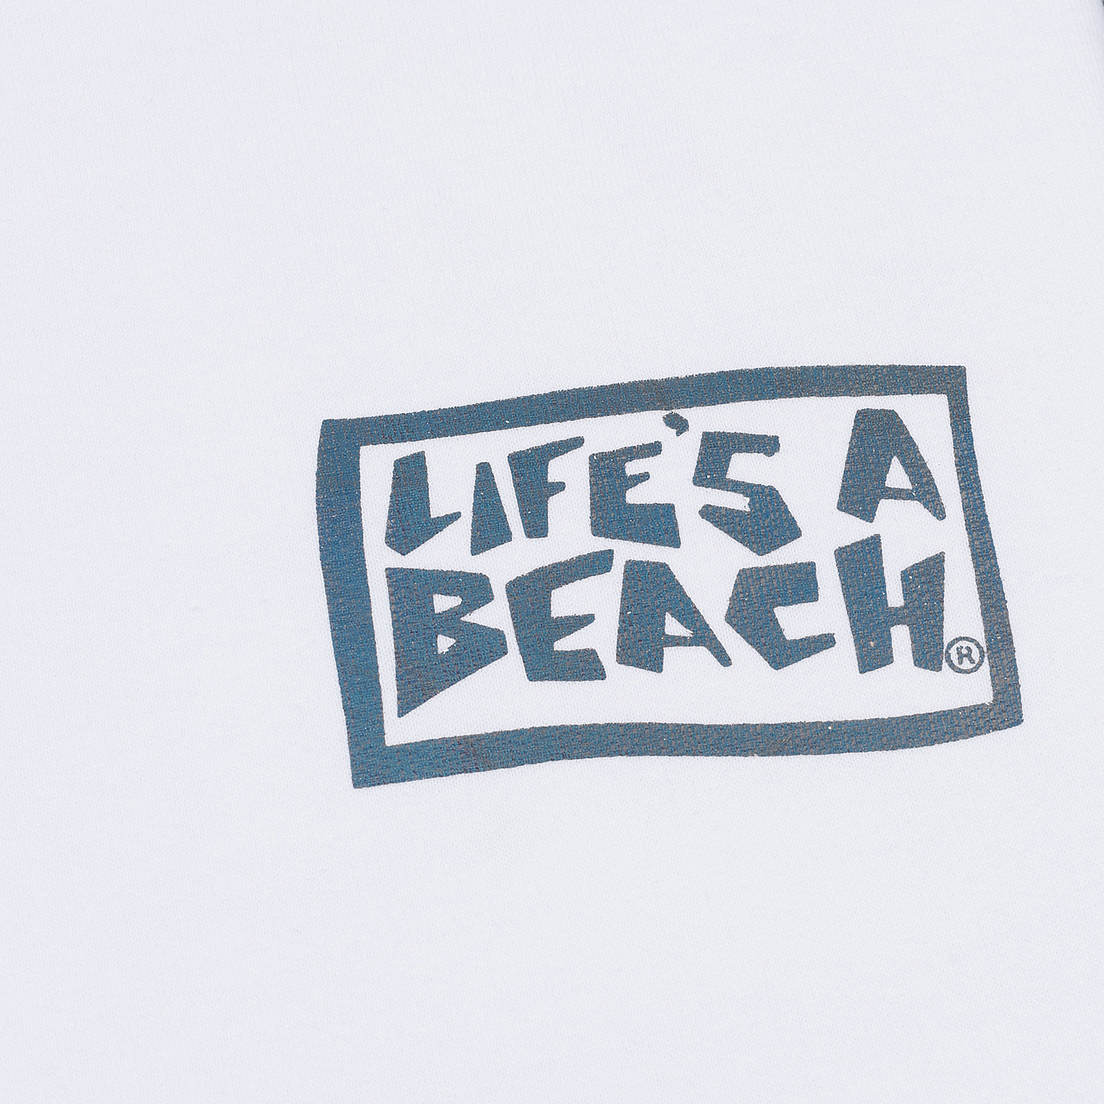 Life's a Beach Мужская толстовка Petro Drop Crew